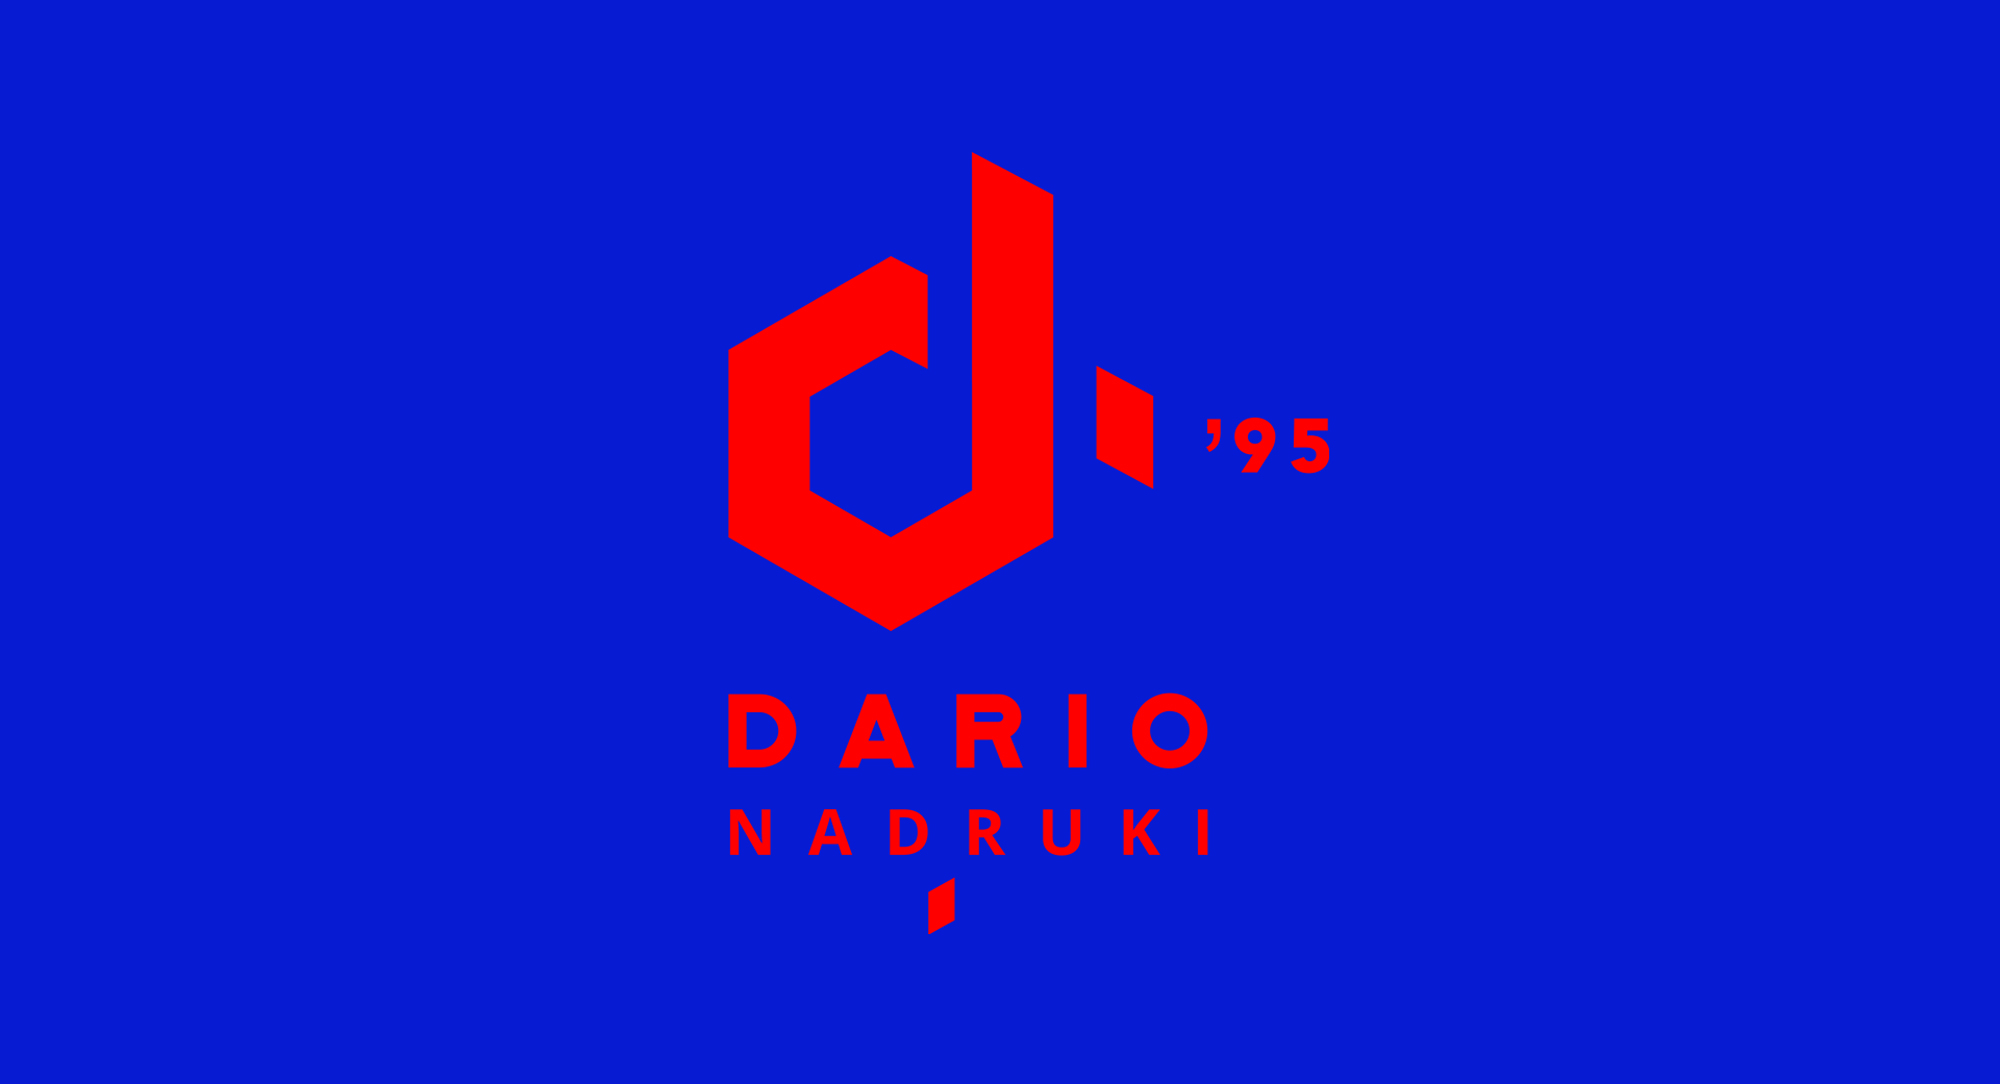 Dario nadruki Łódź. Projekt logo, branding - Shadowart